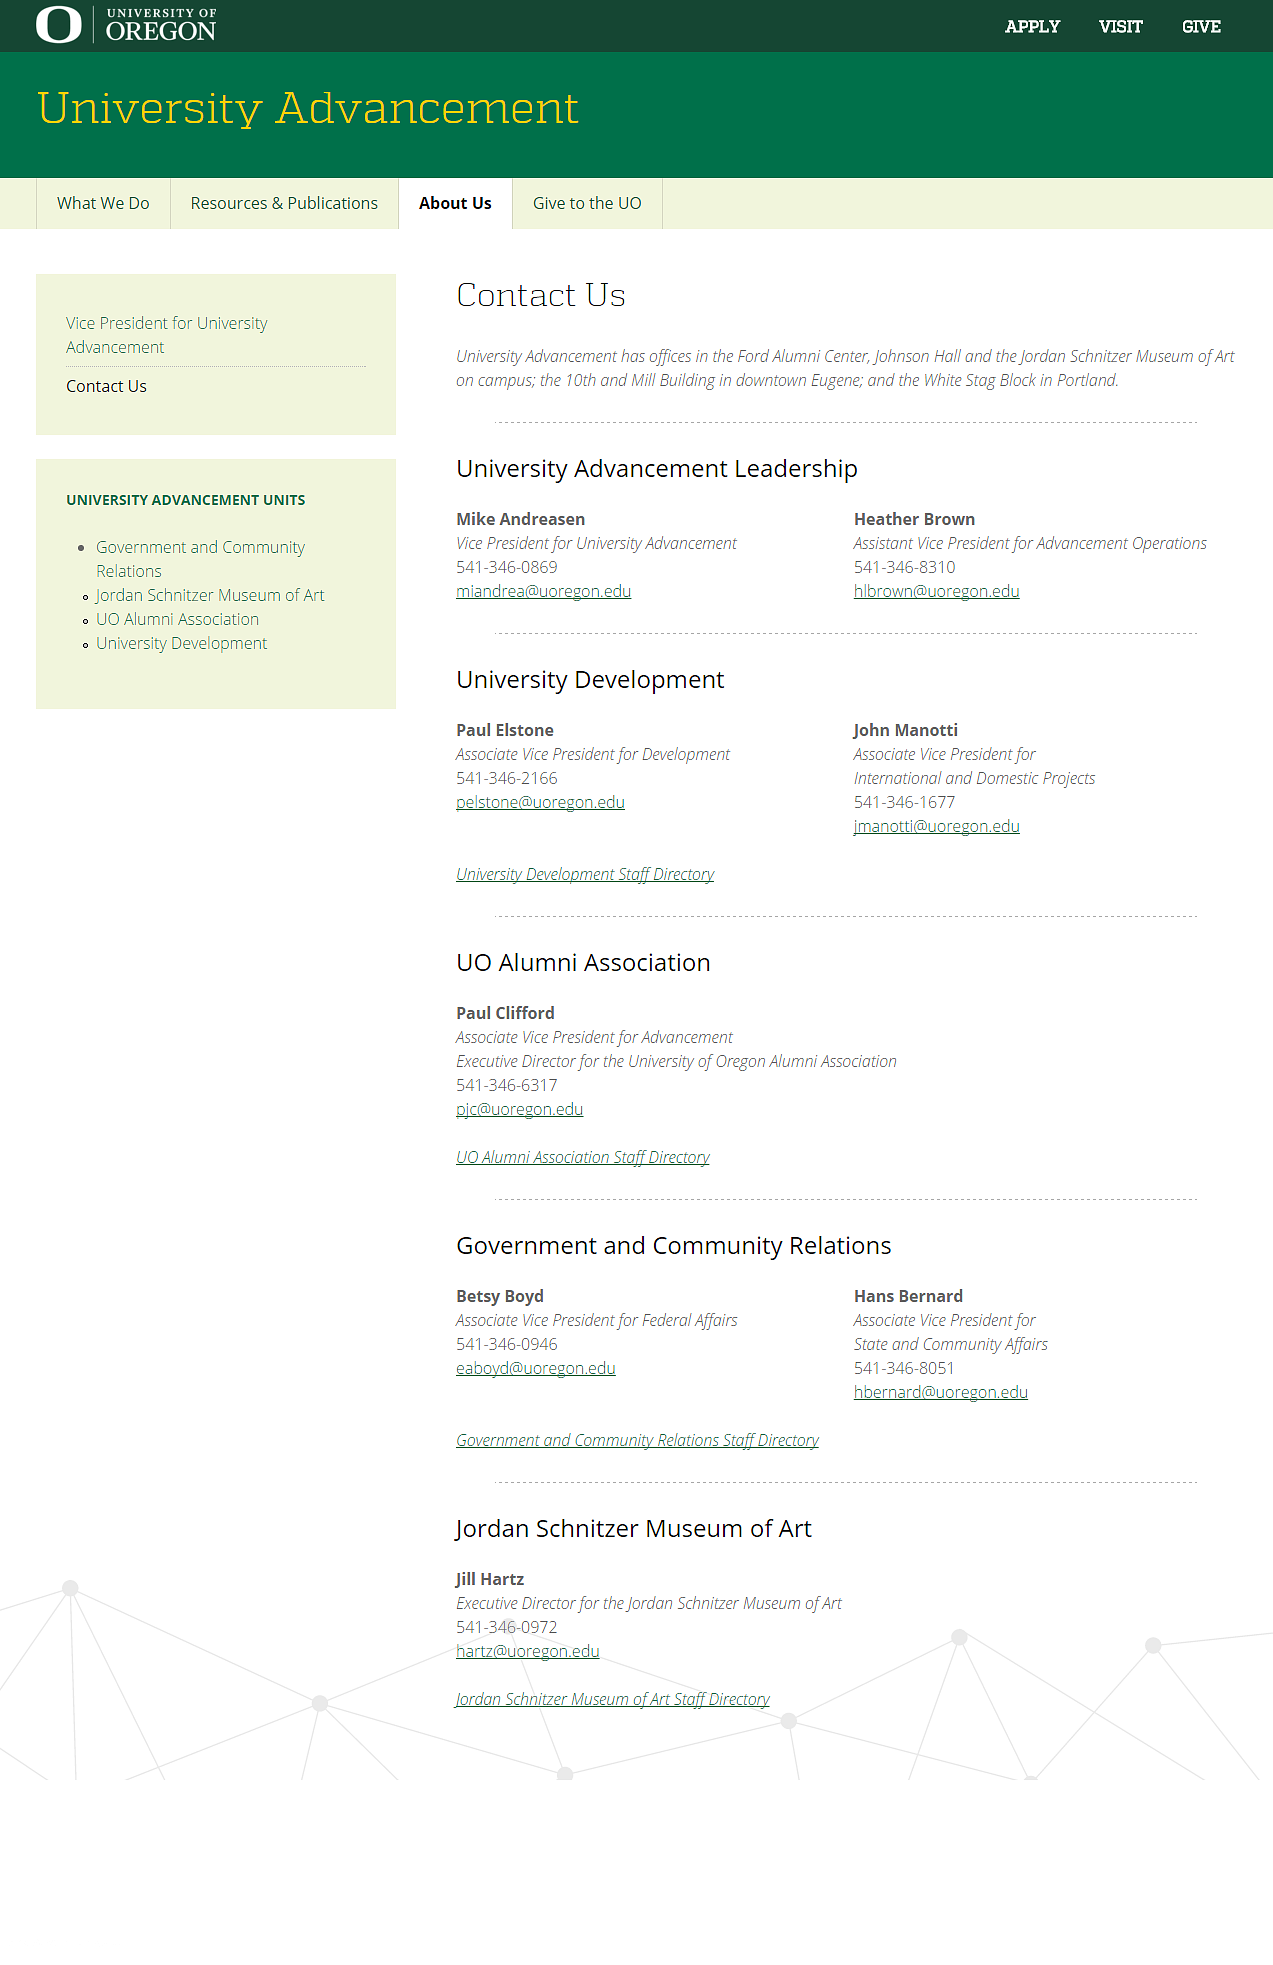 Screenshot of the Advancement staff directory